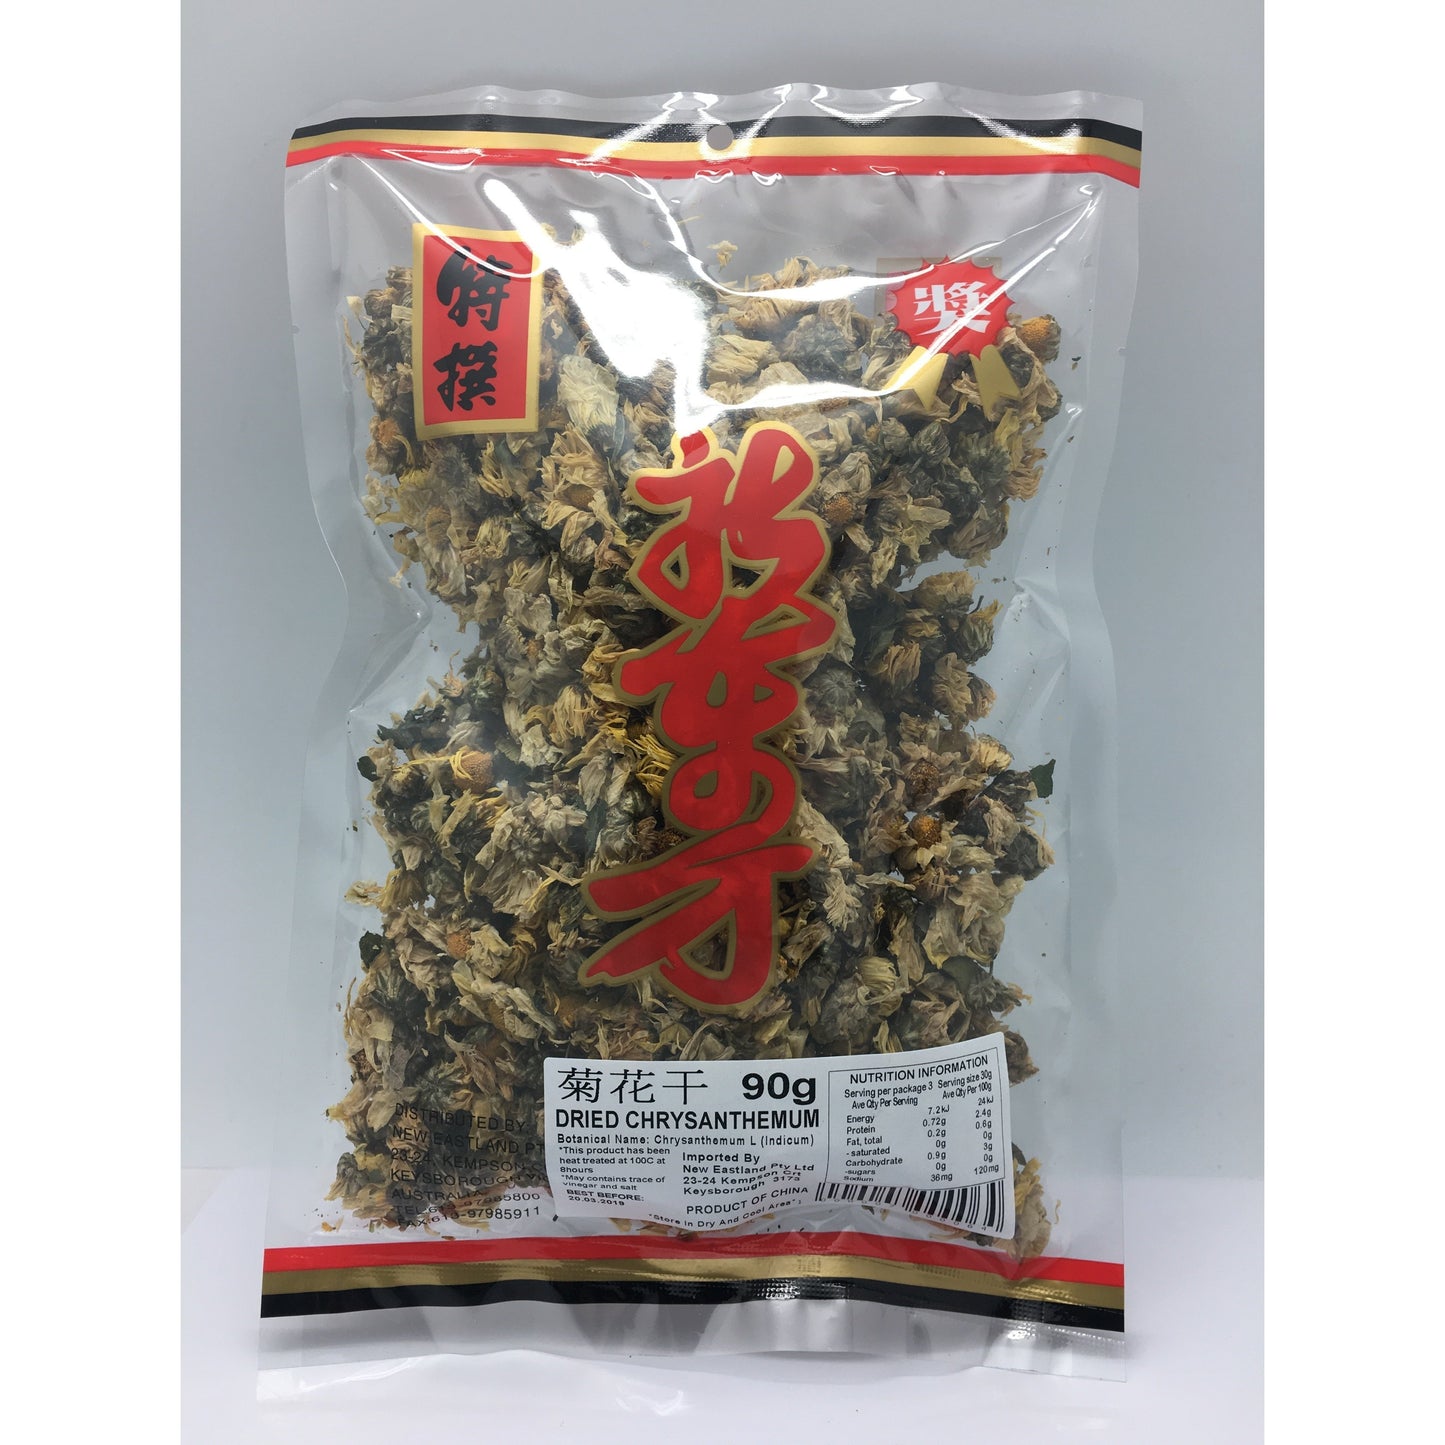 D006M New Eastland Pty Ltd - Dried Chrysanthemum 90g - 25 bags / 1CTN - New Eastland Pty Ltd - Asian food wholesalers